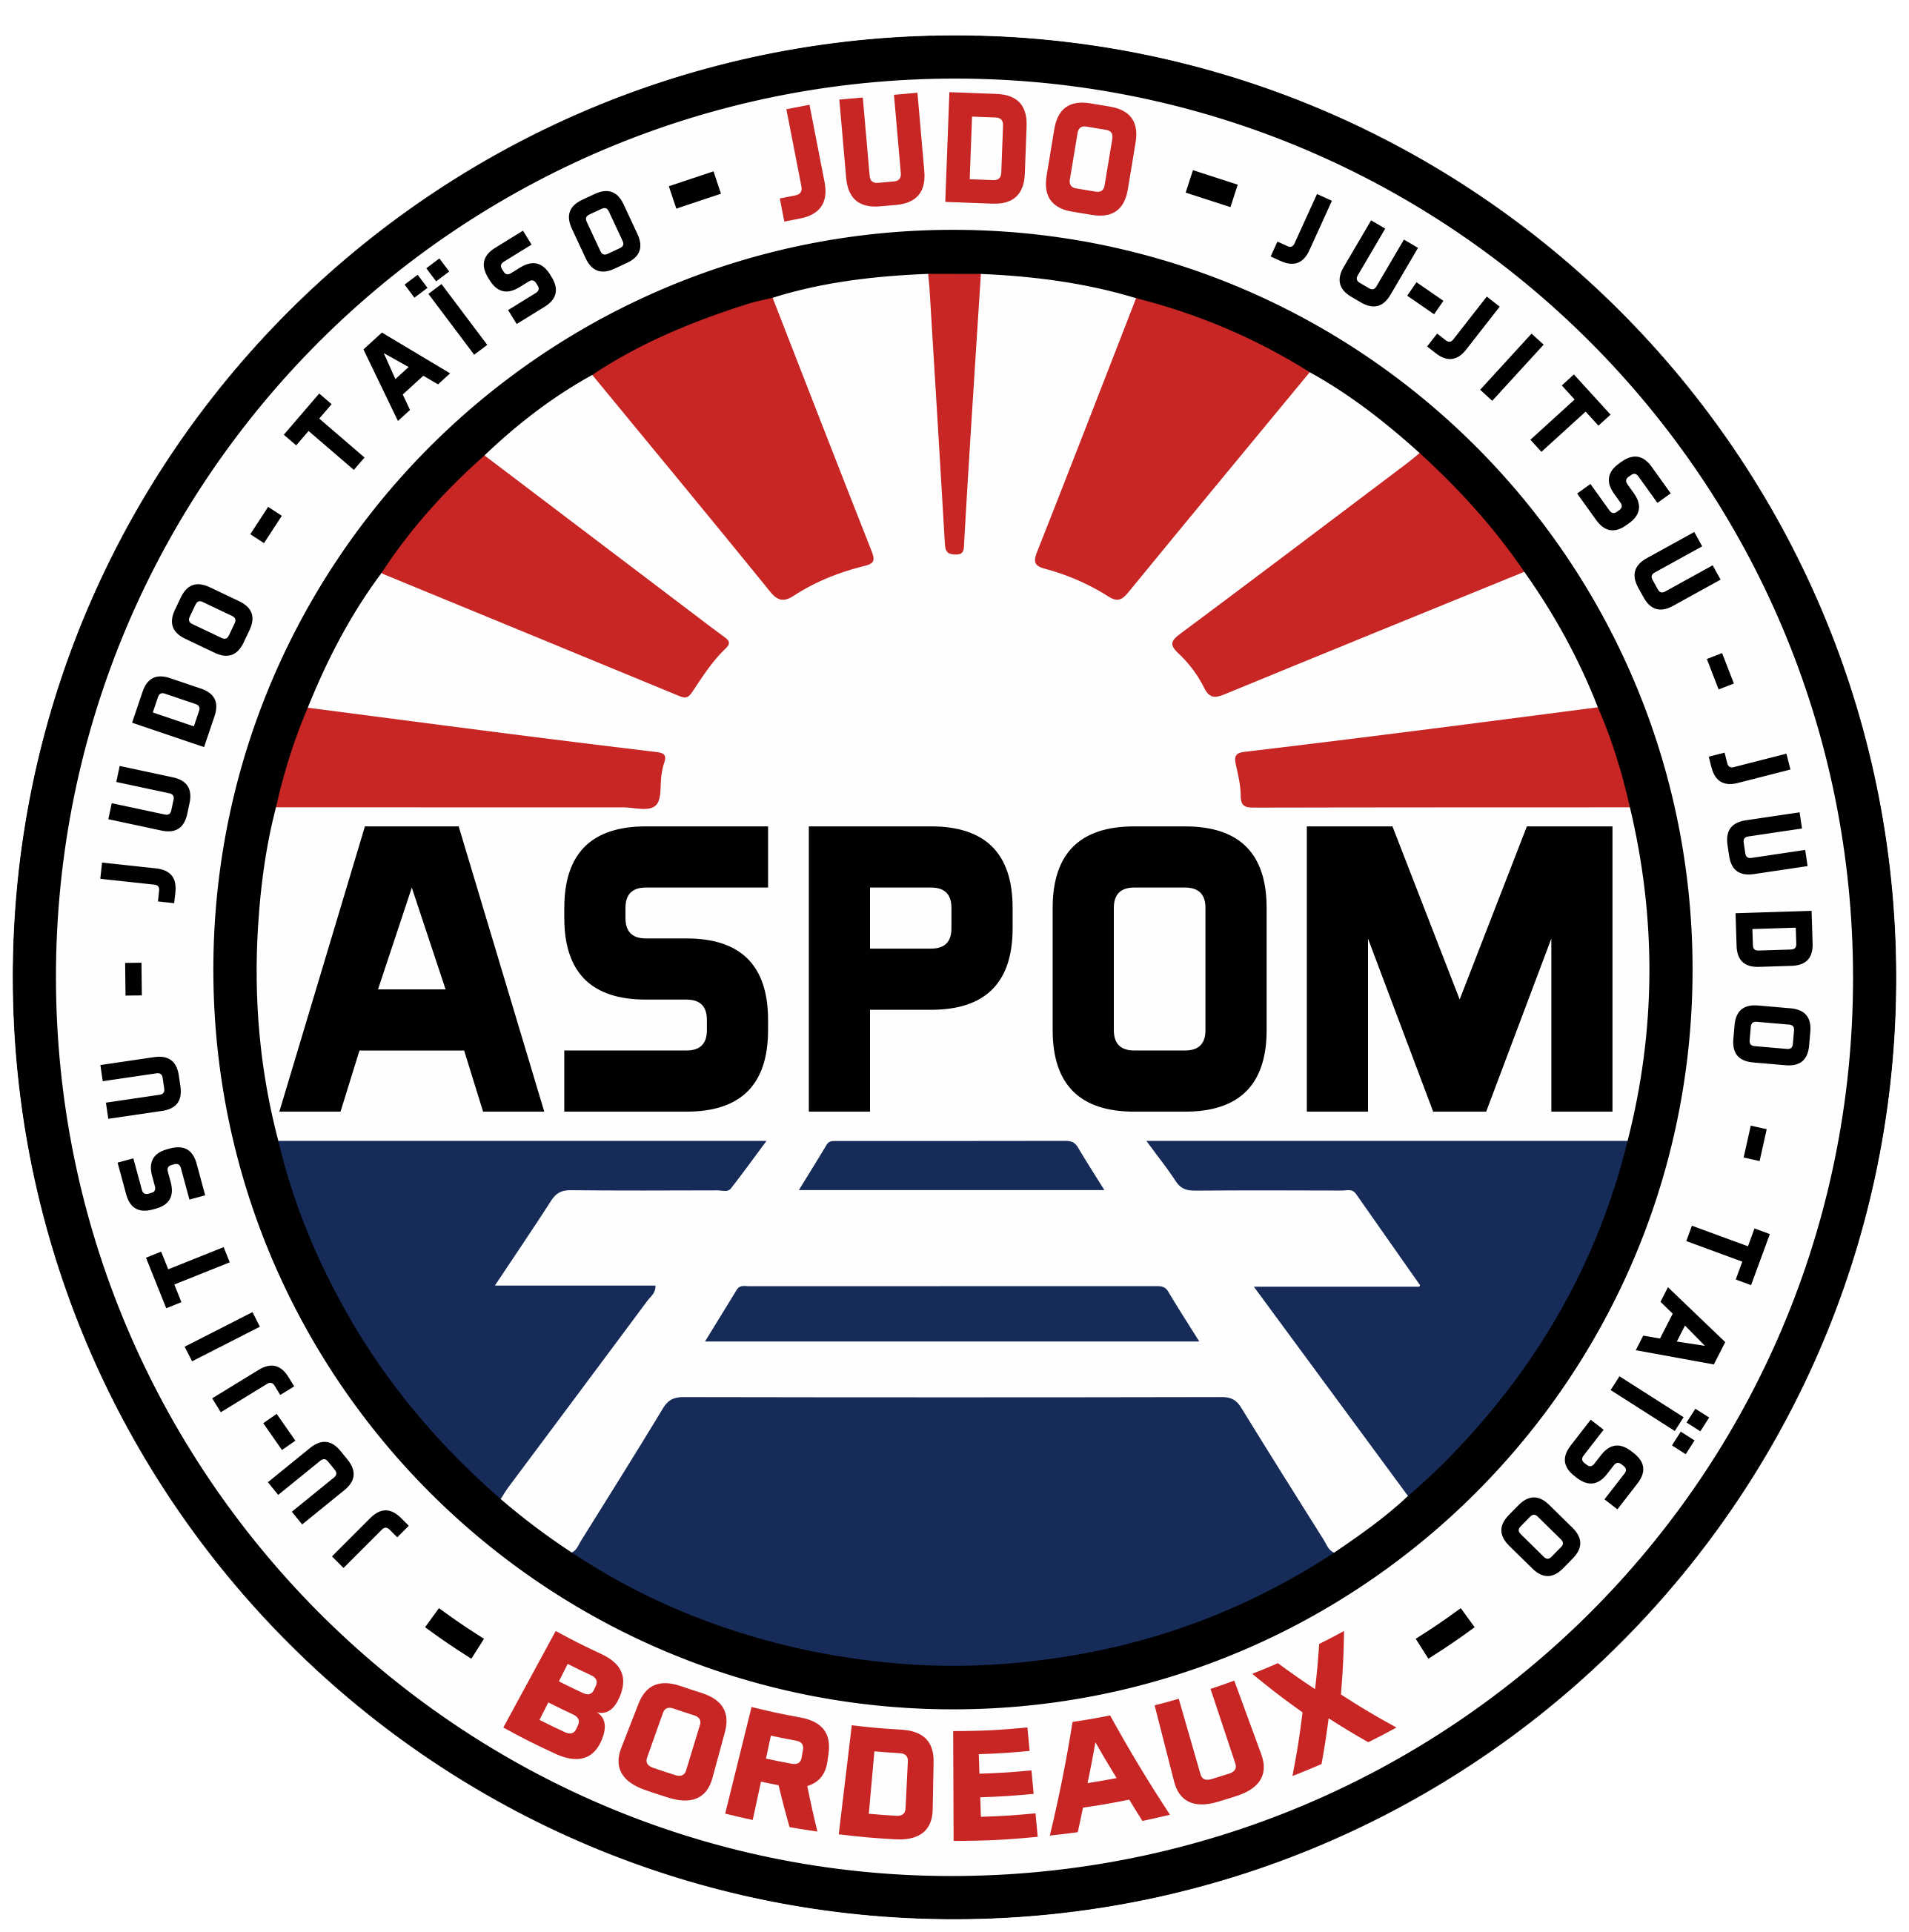 ASPOM Bordeaux Judo